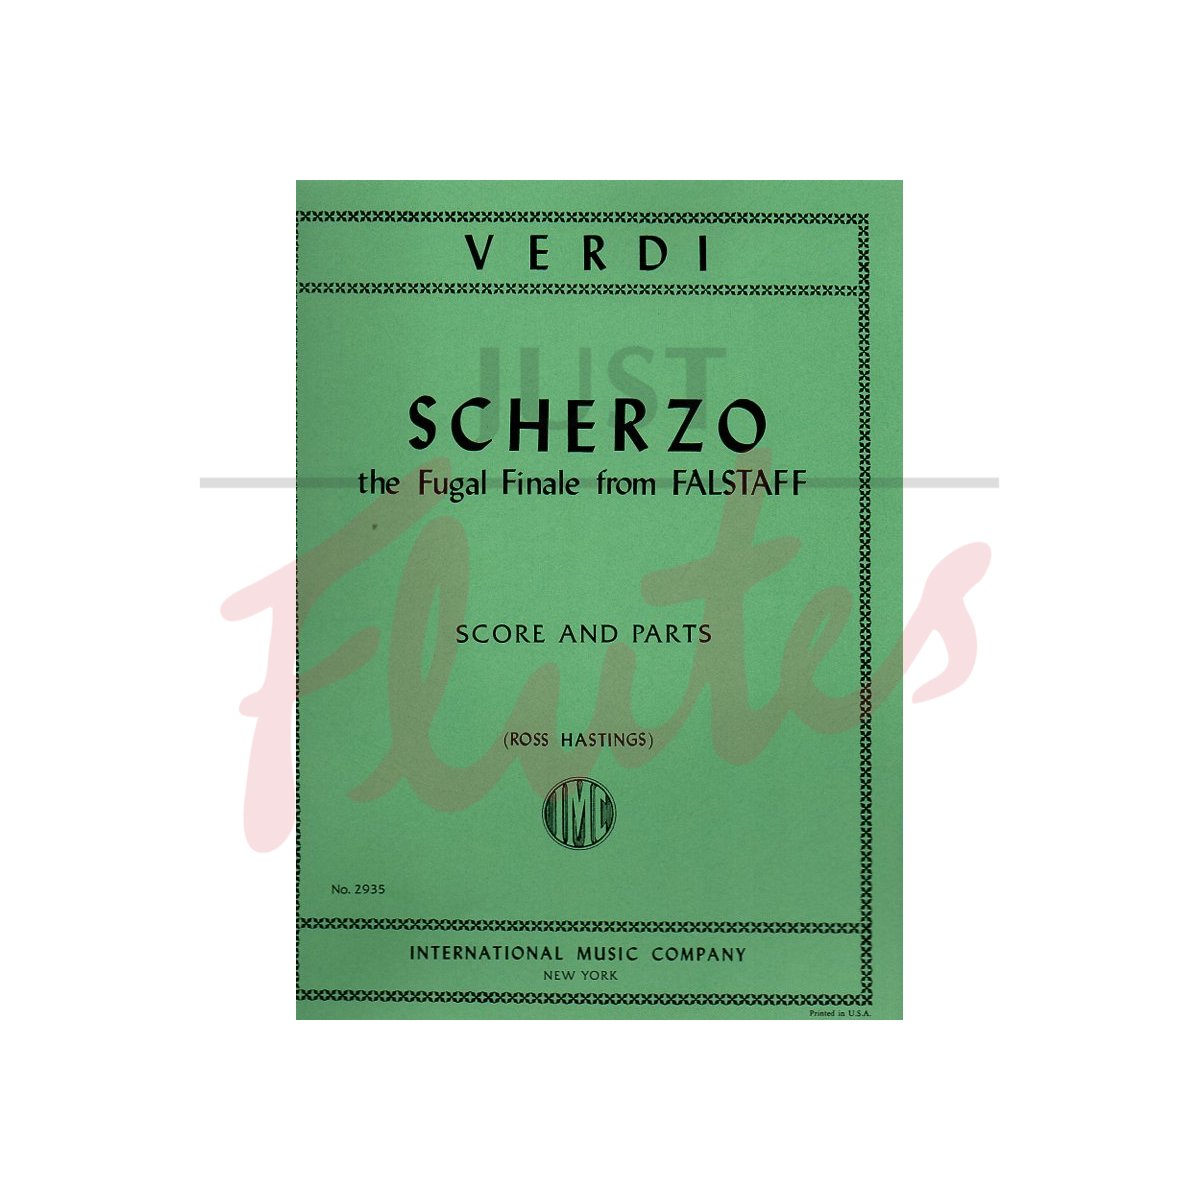 Scherzo  - The Fugal Finale from Falstaff arranged for Wind Quintet